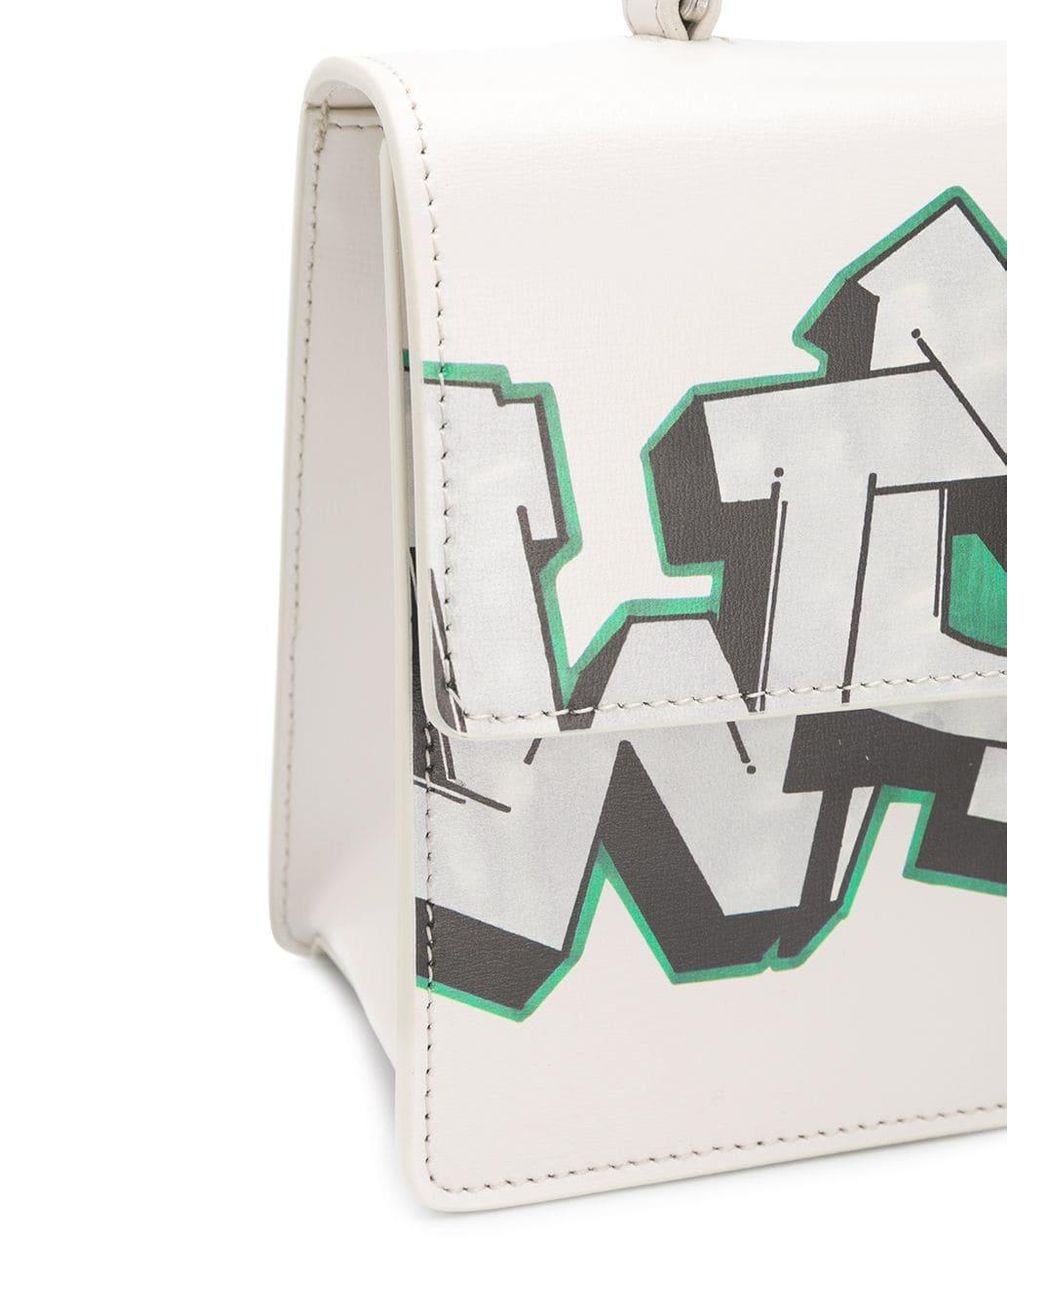 NIB OFF-WHITE C/O VIRGIL ABLOH White Gummy Jitney 2.8 Bag Size OS $1190  2100001343712